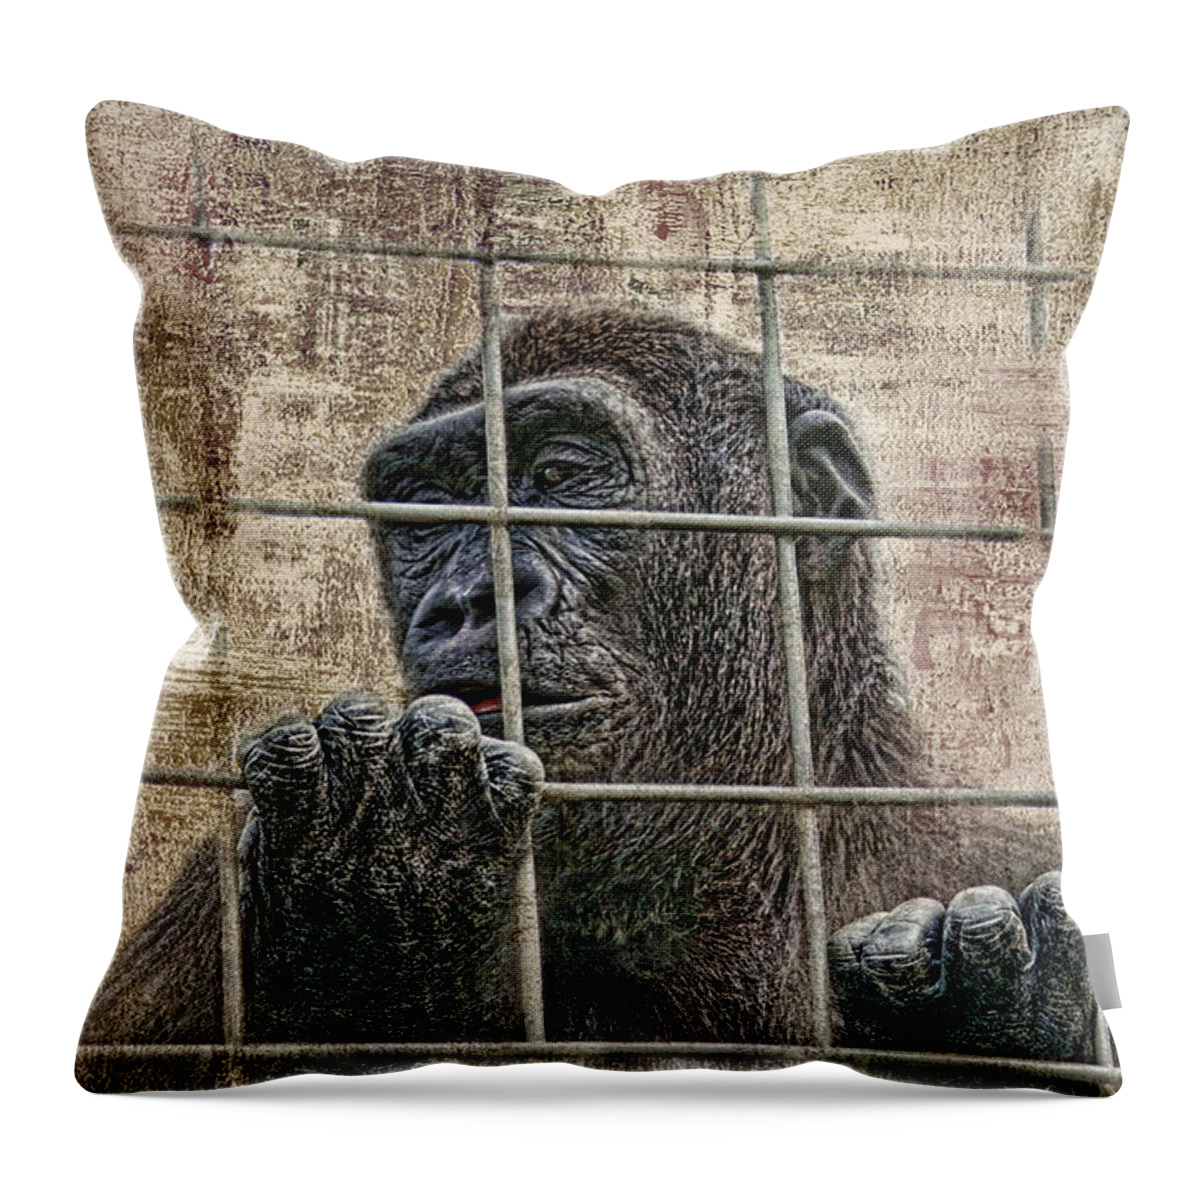 Gorilla Throw Pillow featuring the photograph Captivity by Tom Mc Nemar